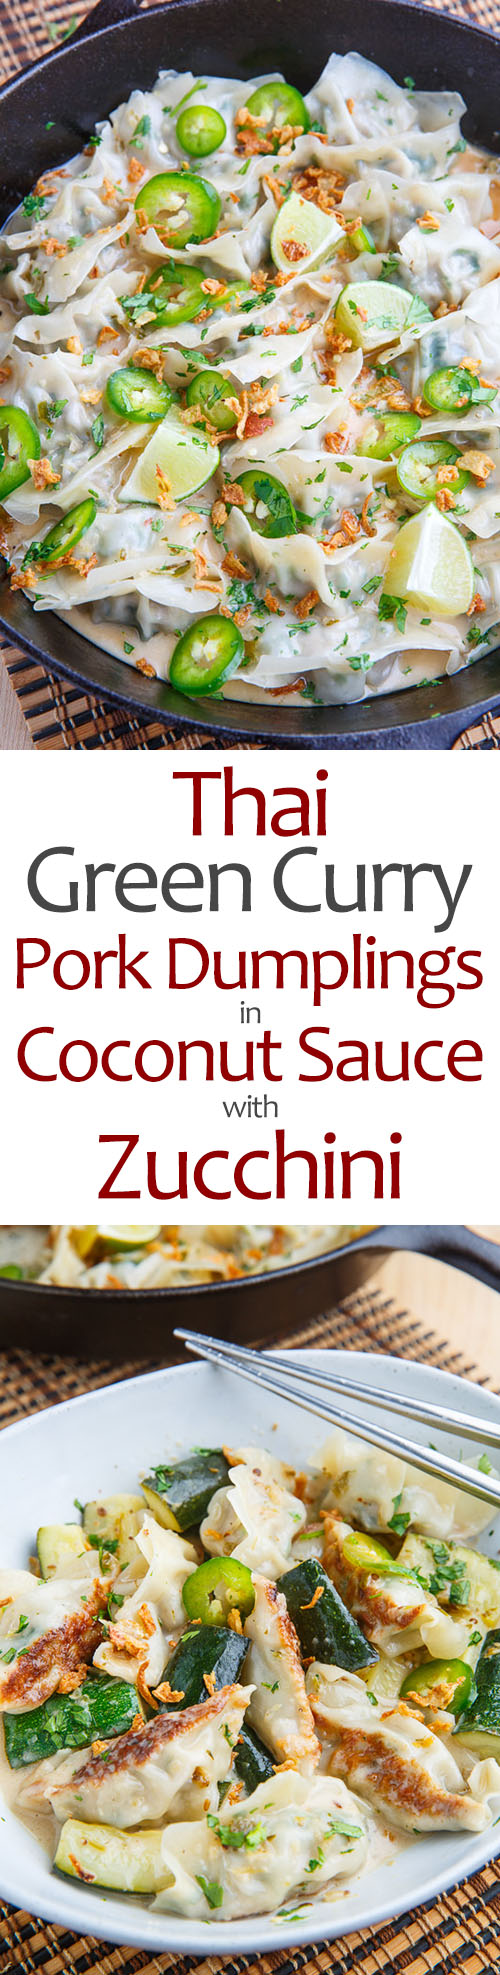 Thai Green Curry Pork Dumplings in Coconut Sauce with Zucchini